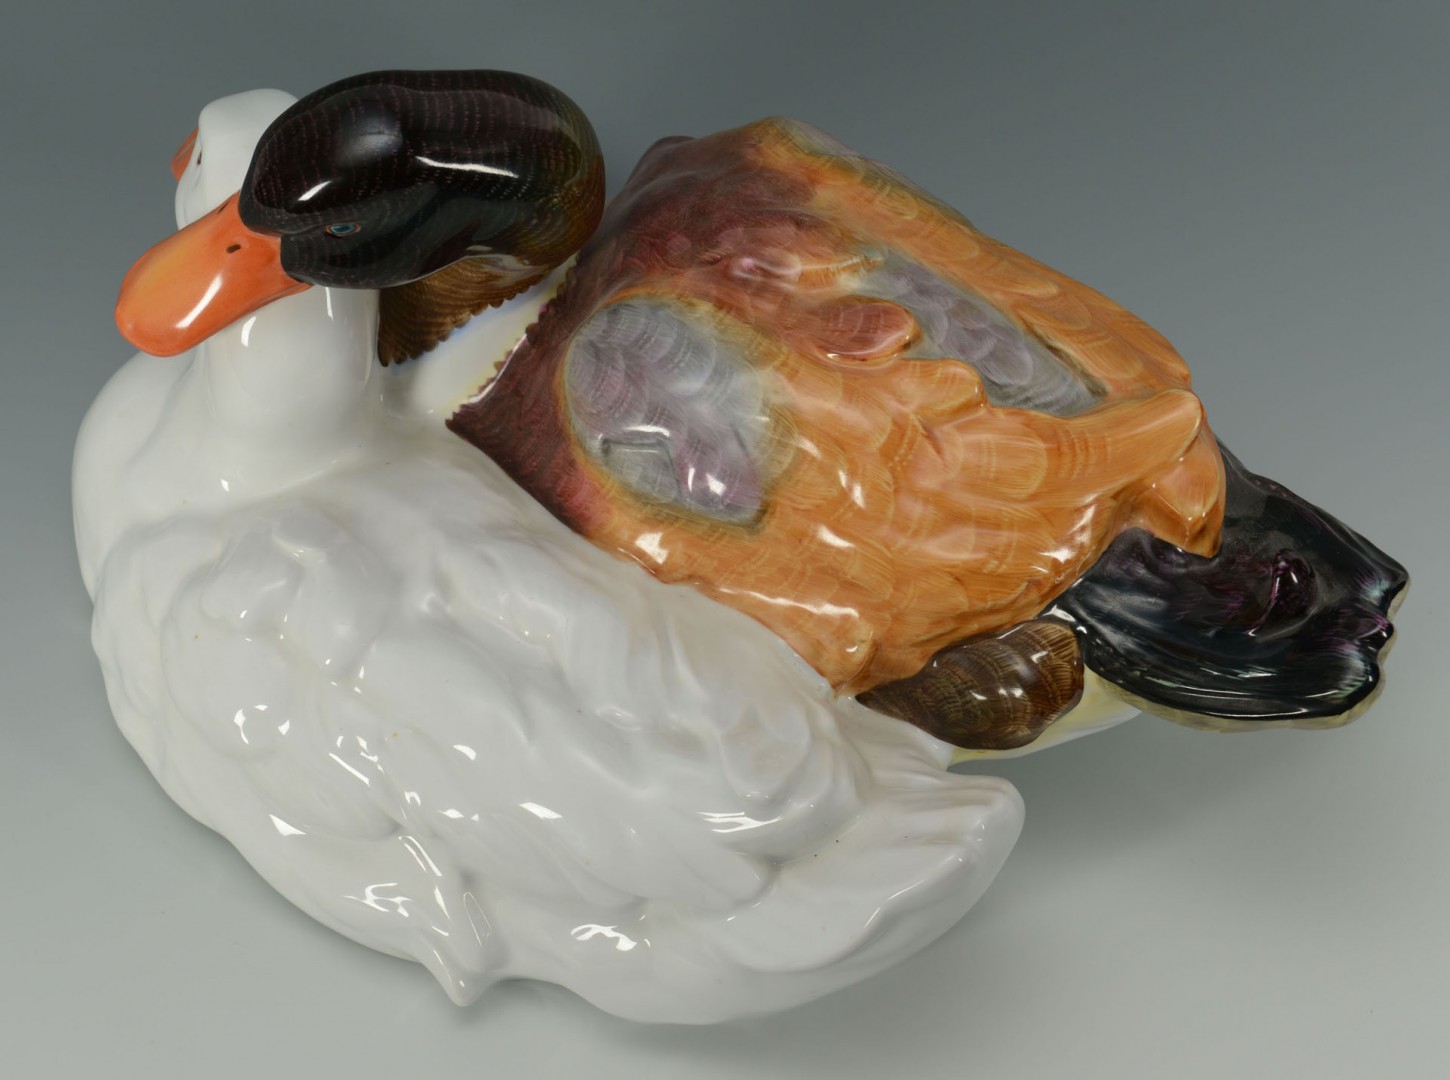 Lot 142: Large Herend Porcelain Ducks Sculpture & Carvings